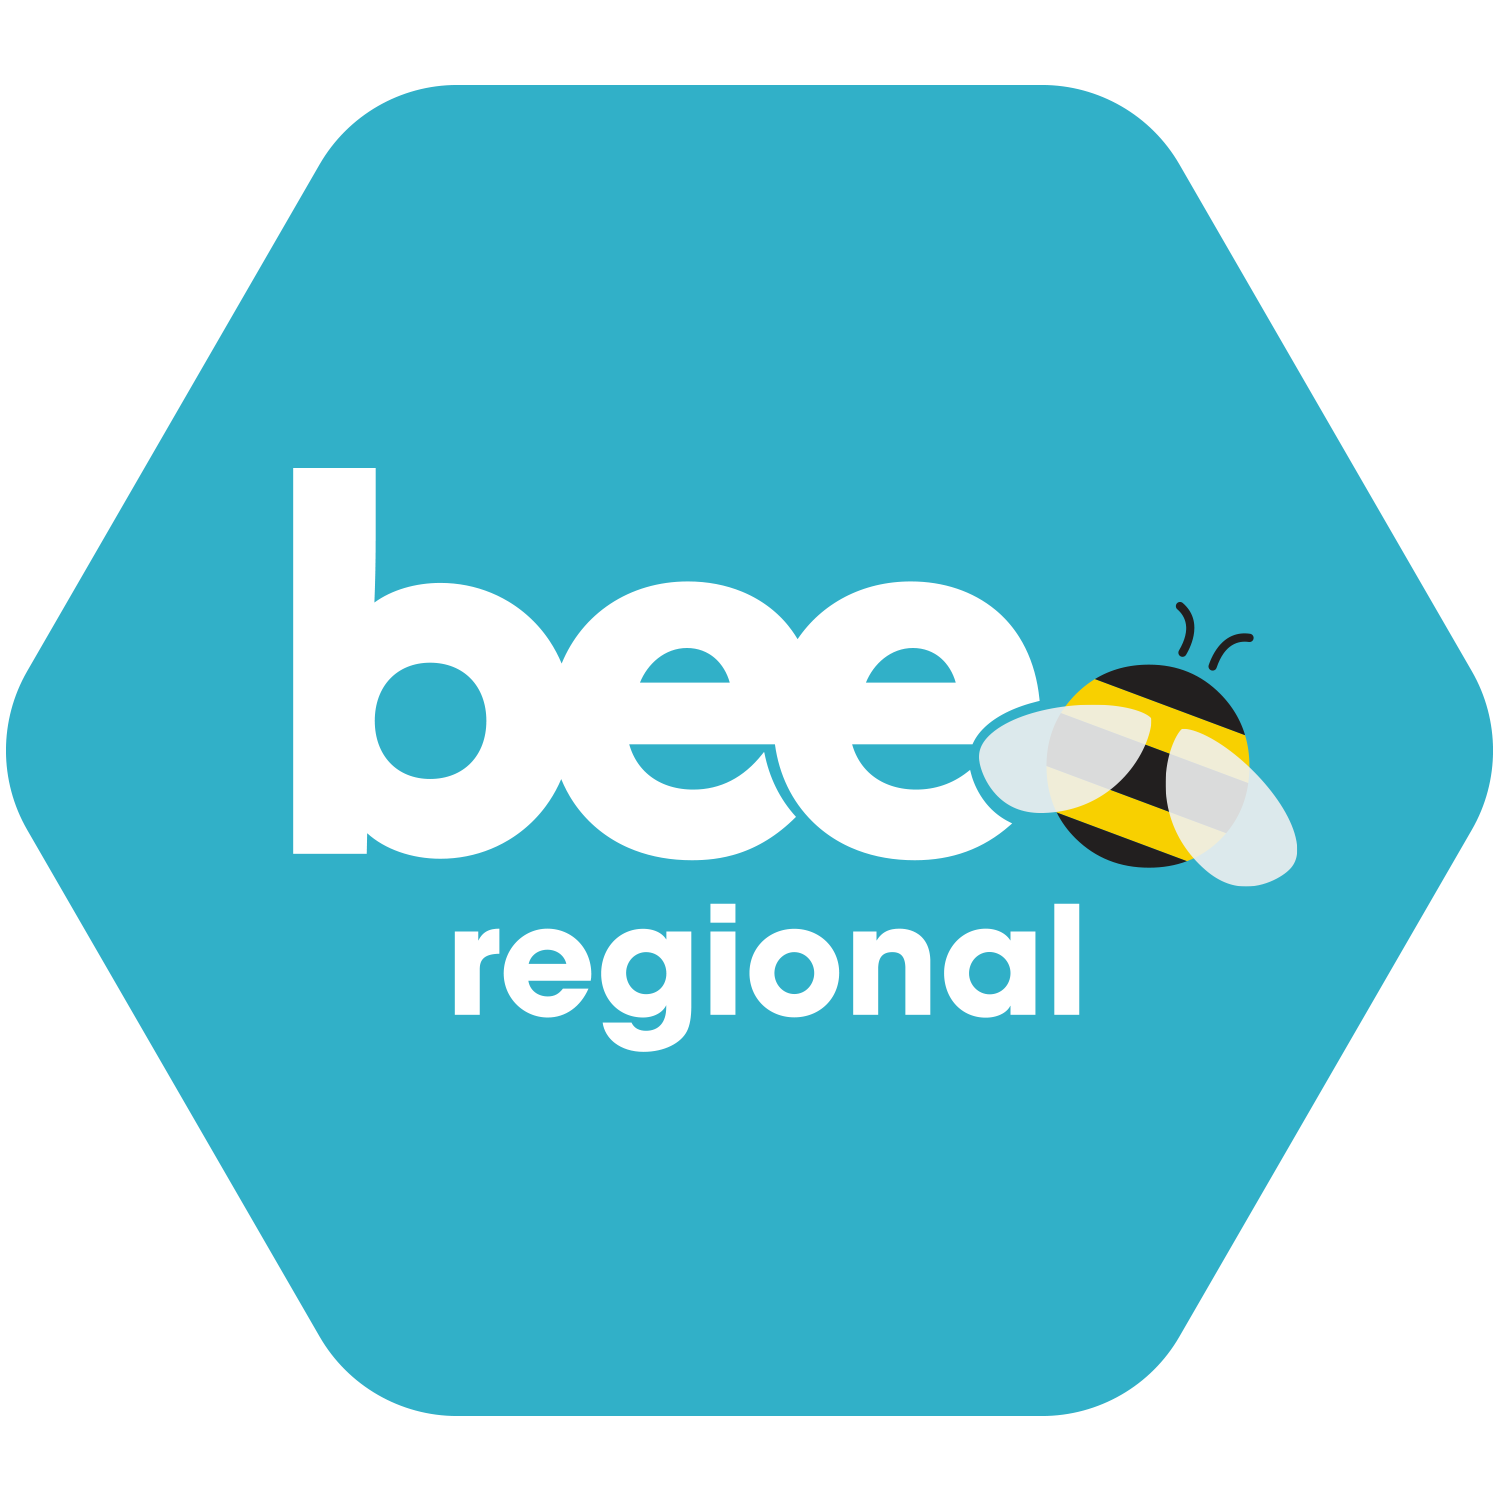 Scripps National Spelling Bee regional level logo